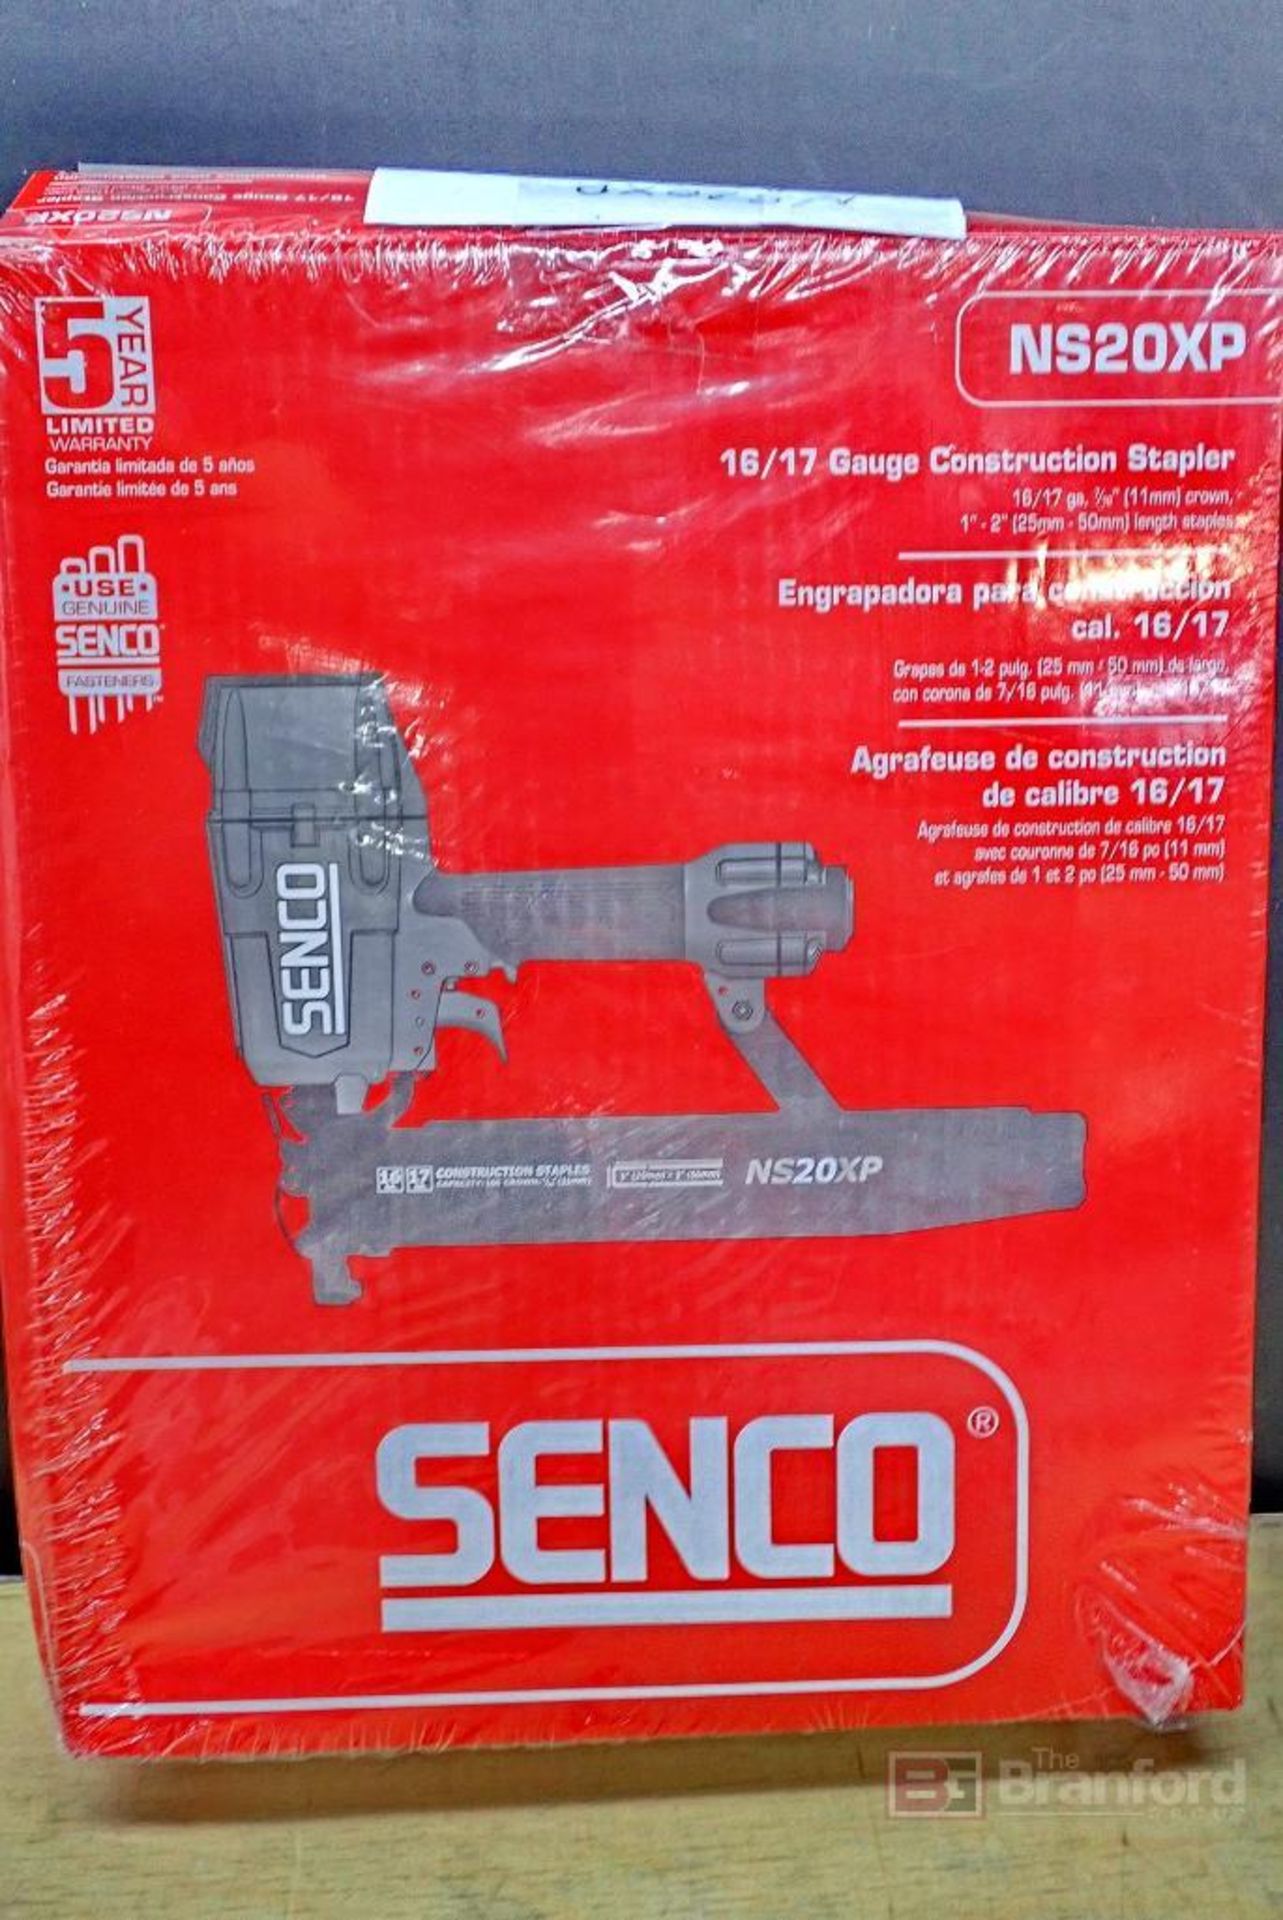 Senco NS20XP 16/17 Gauge Construction Stapler - Image 3 of 4